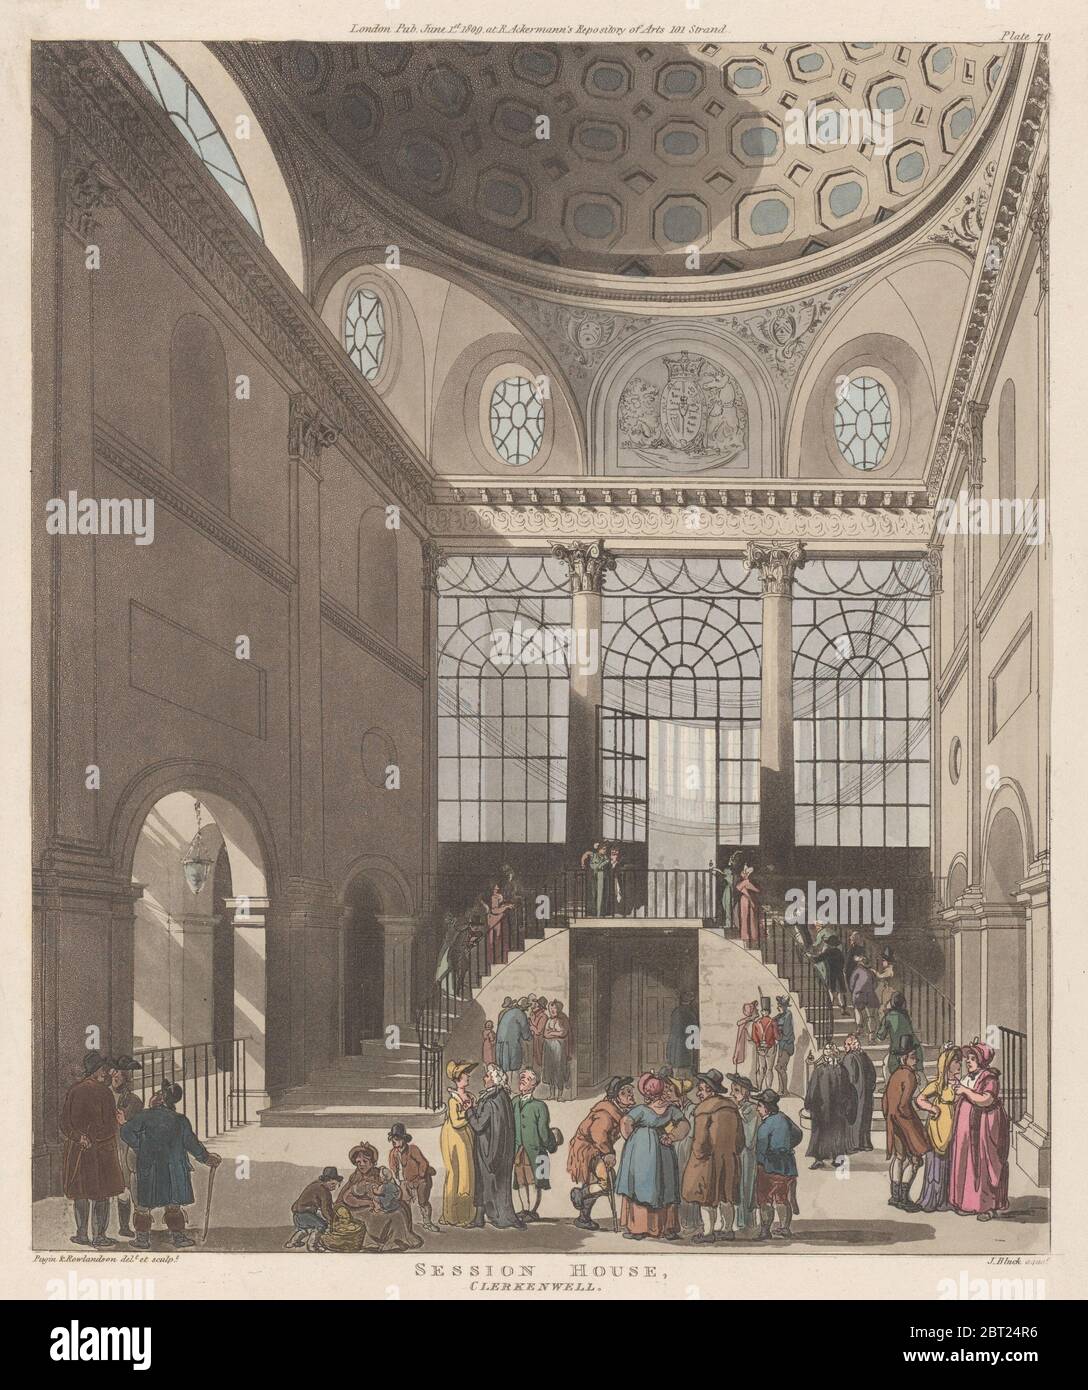 Session House, Clerkenwell, June 1, 1809. Stock Photo